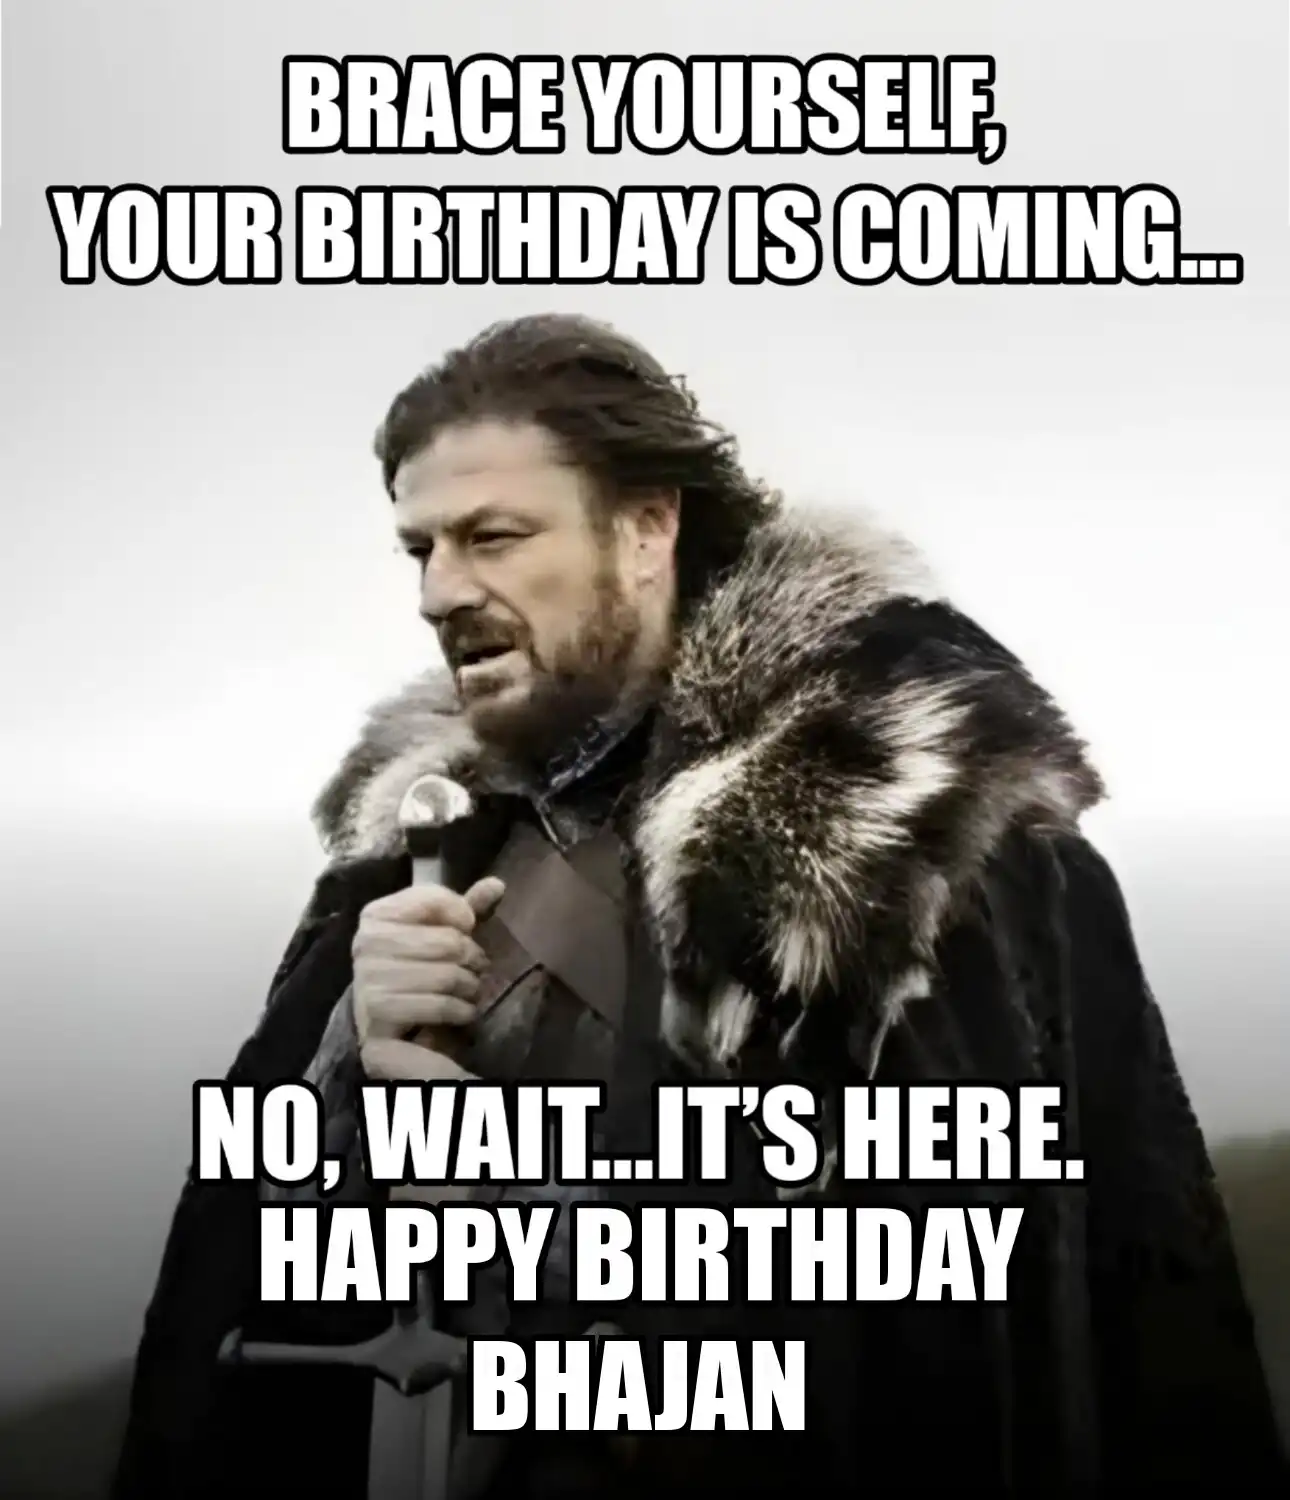 Happy Birthday Bhajan Brace Yourself Your Birthday Is Coming Meme